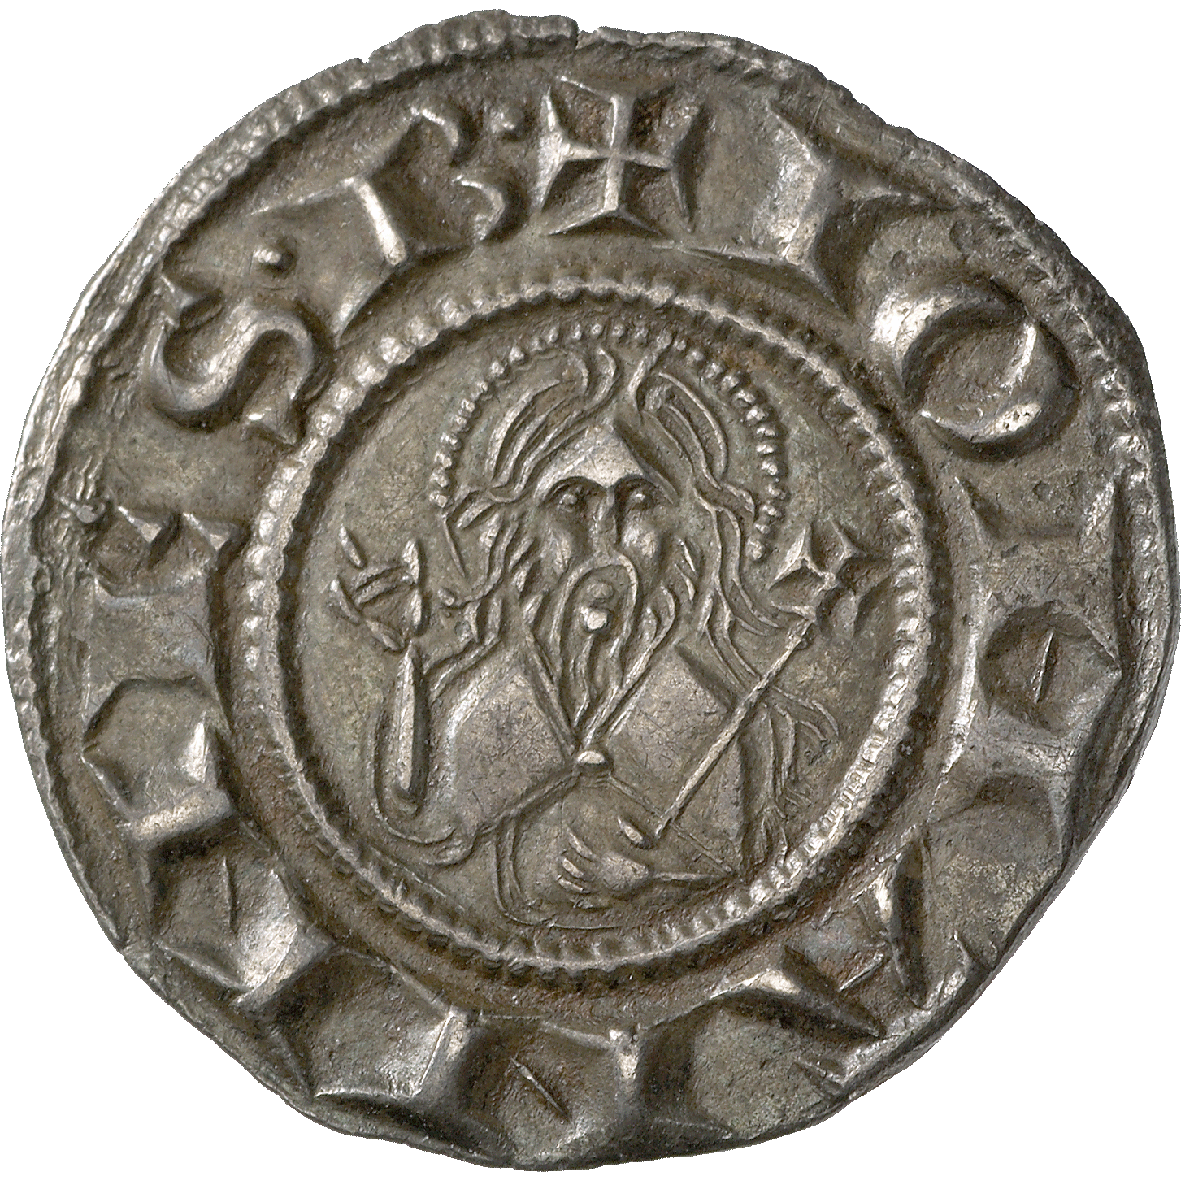 Holy Roman Empire, Republic of Florence, Fiorino d'Argento (Grosso) (reverse)